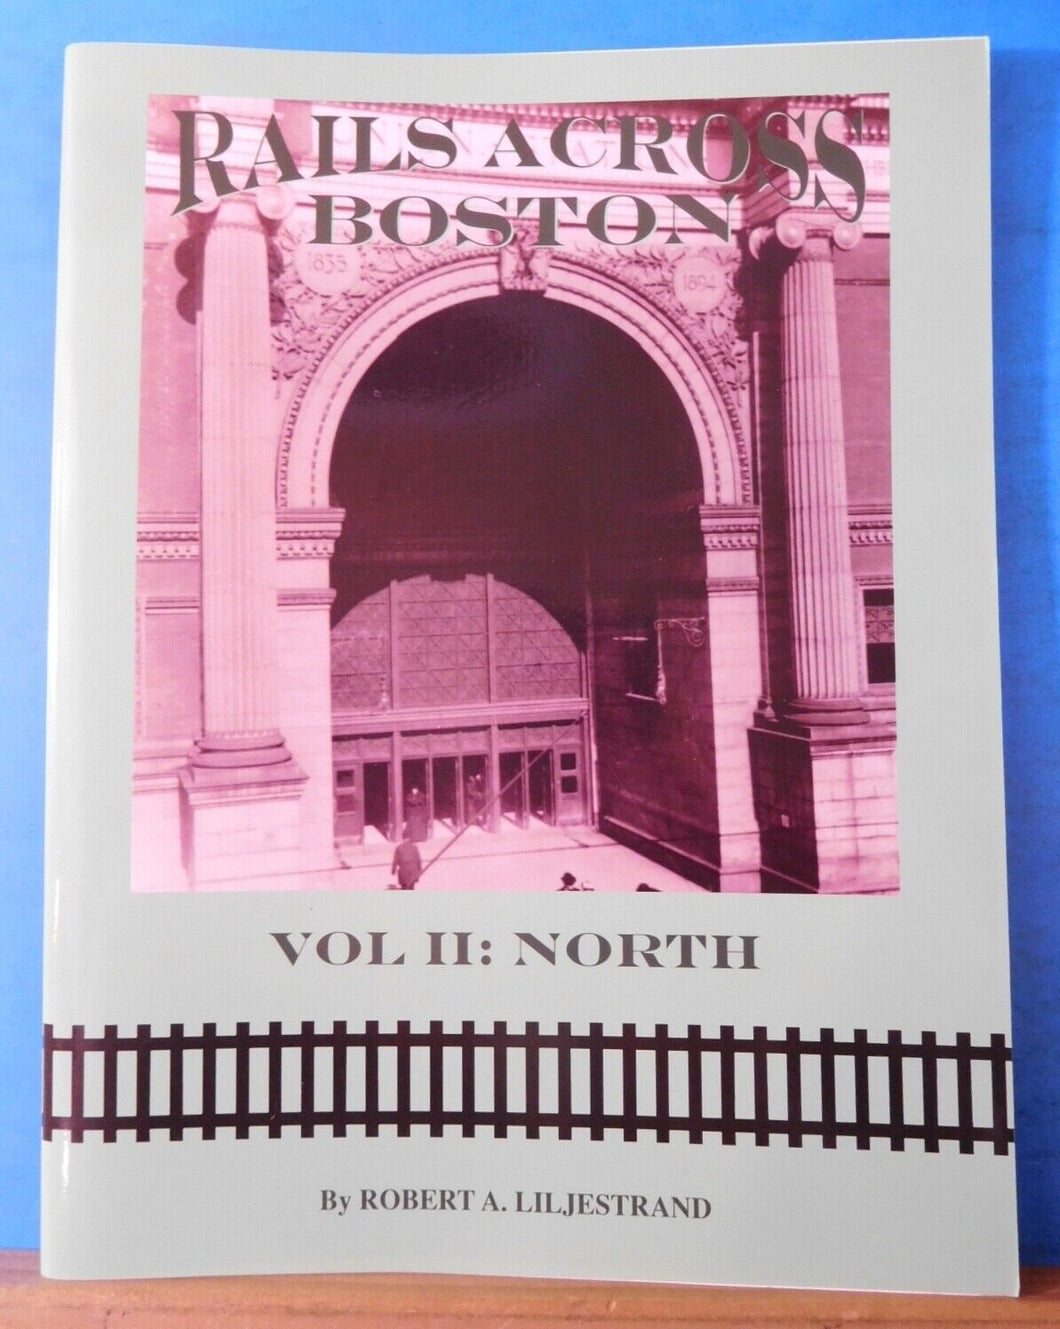 Rails Across Boston Vol II: North By Robert A. Liljestrand